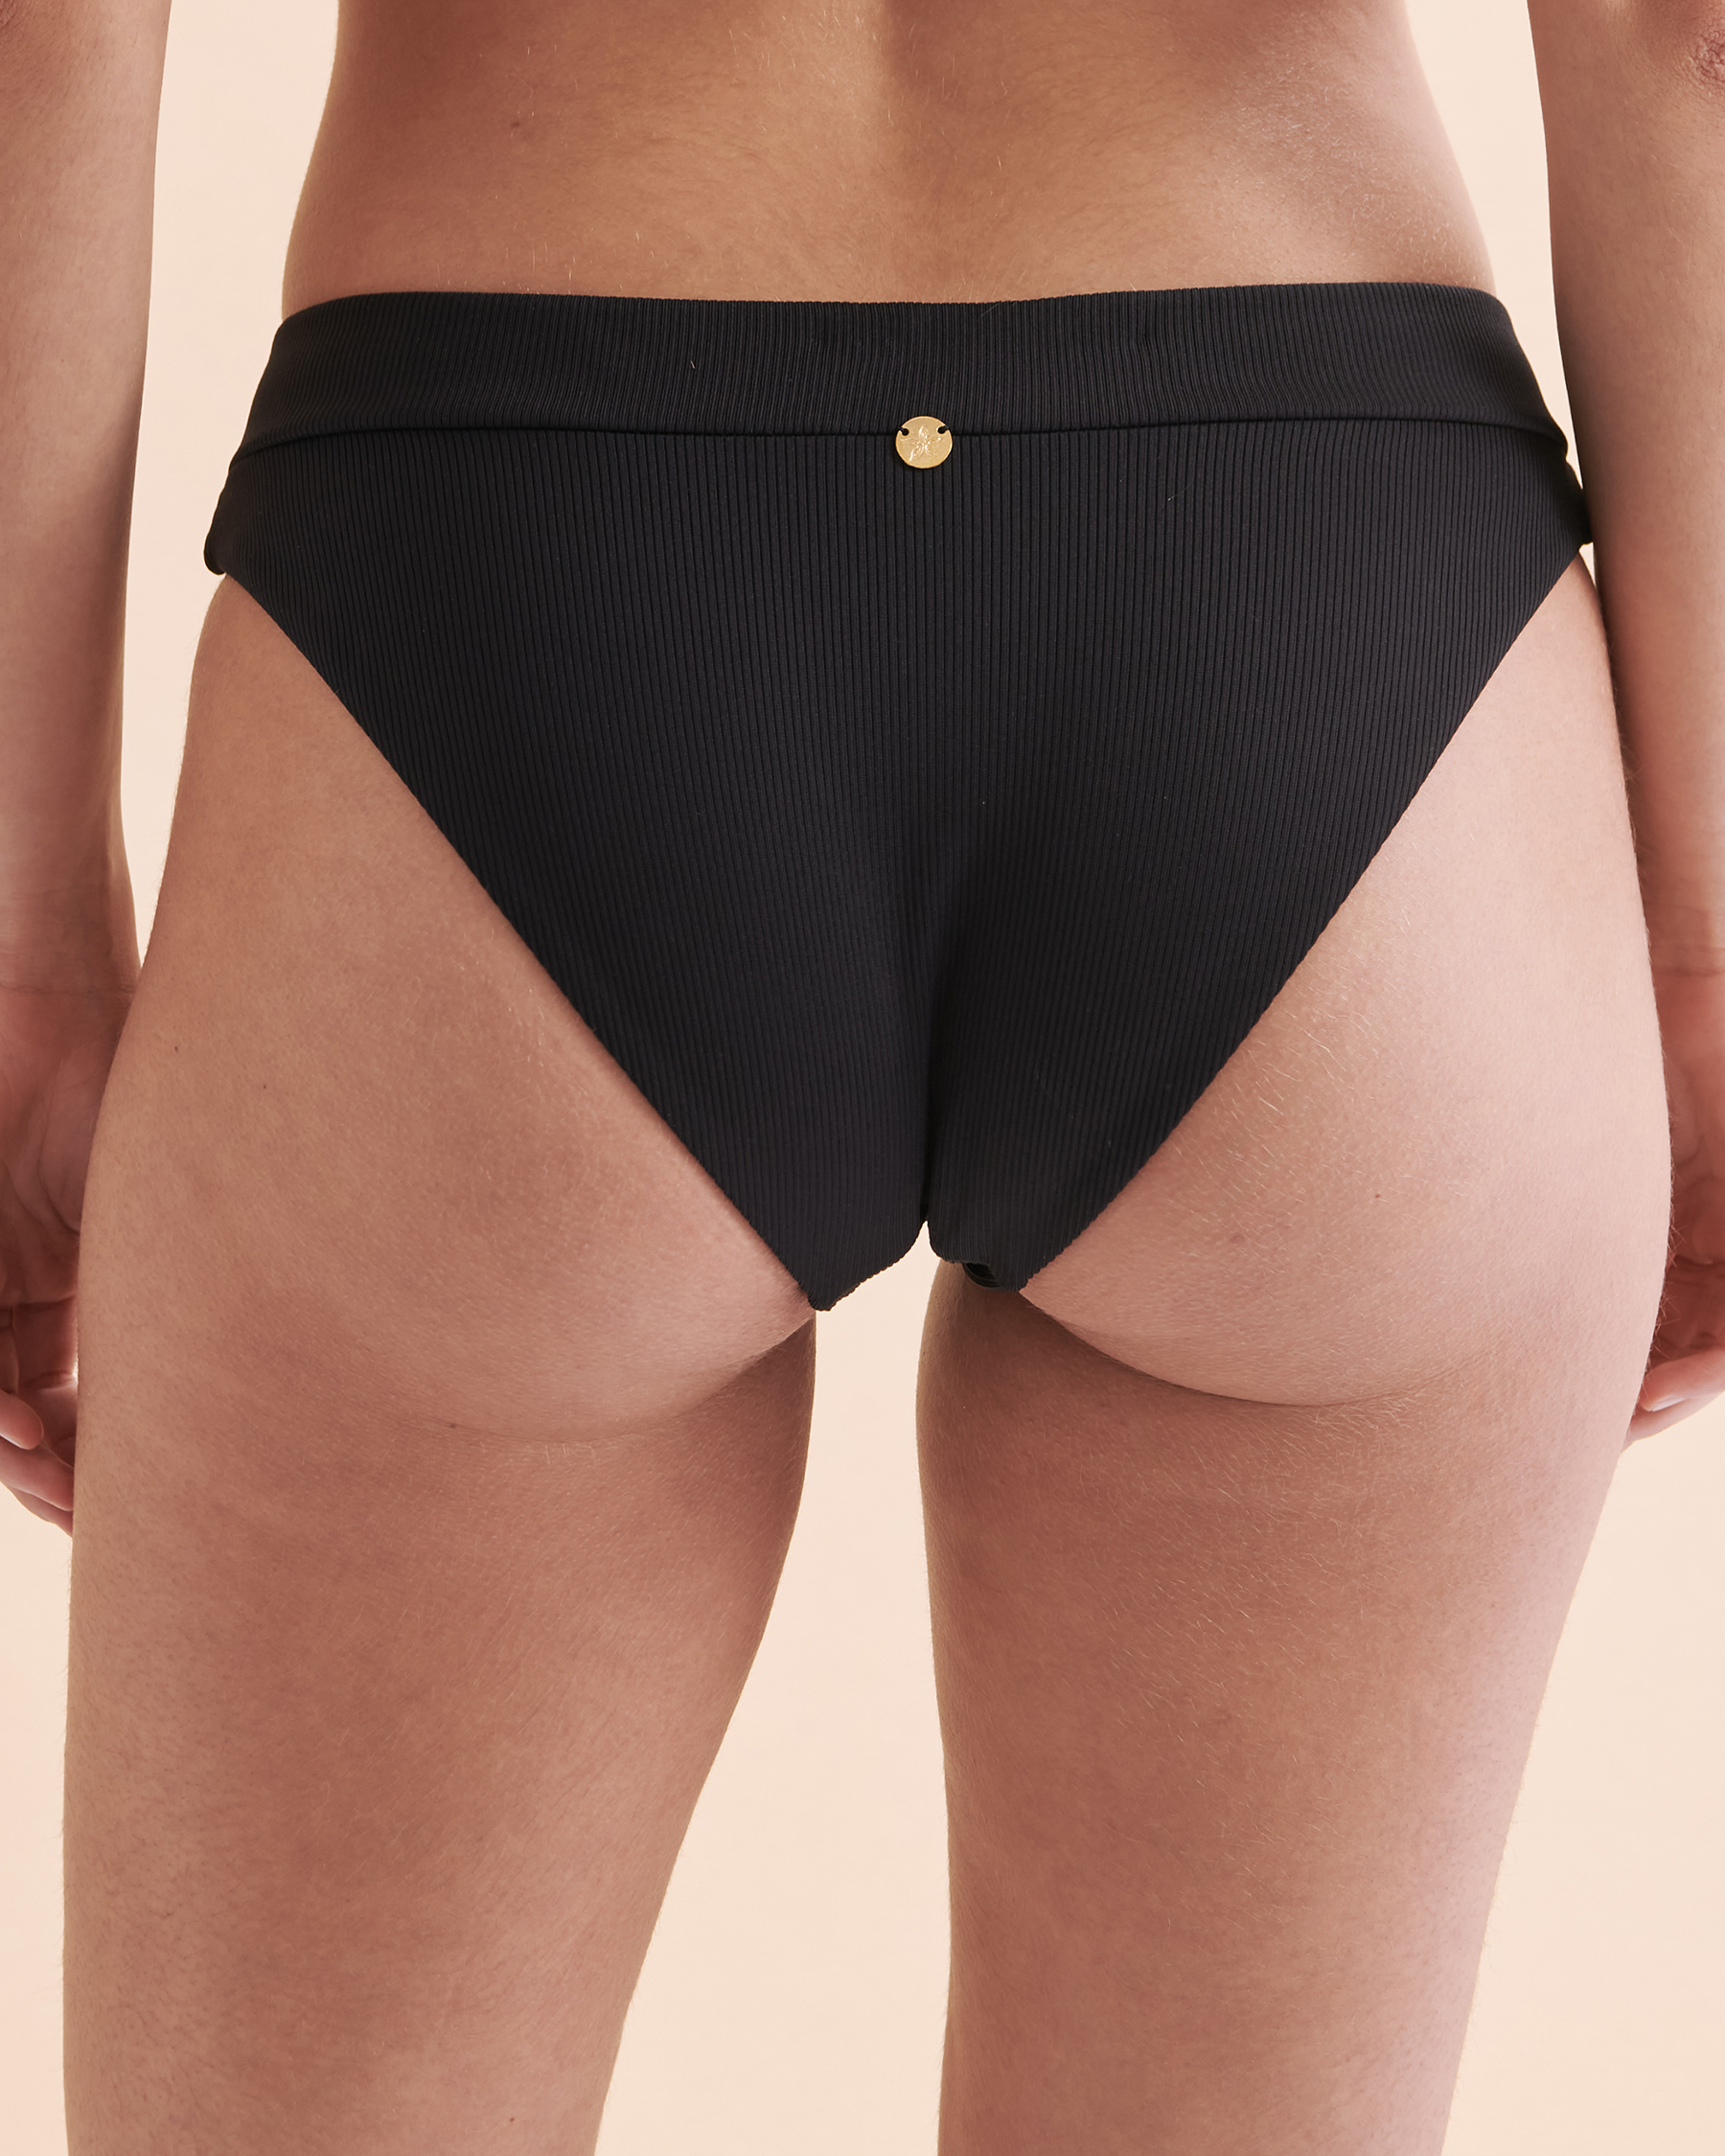 QUINTSOUL Malibu Textured Crossed Waistband Bikini Bottom - Black